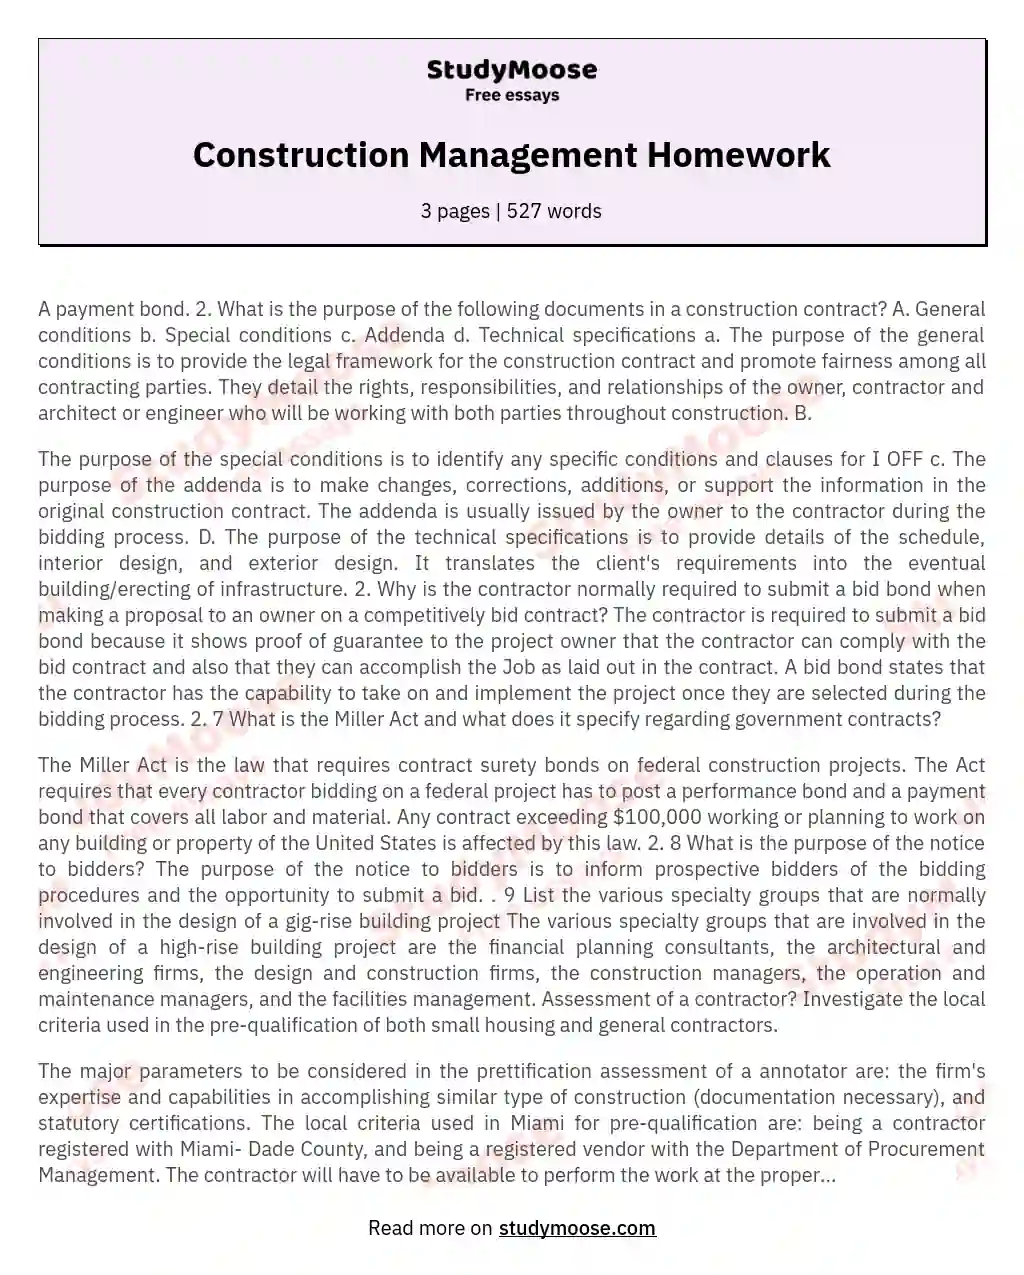 Construction Management Homework essay